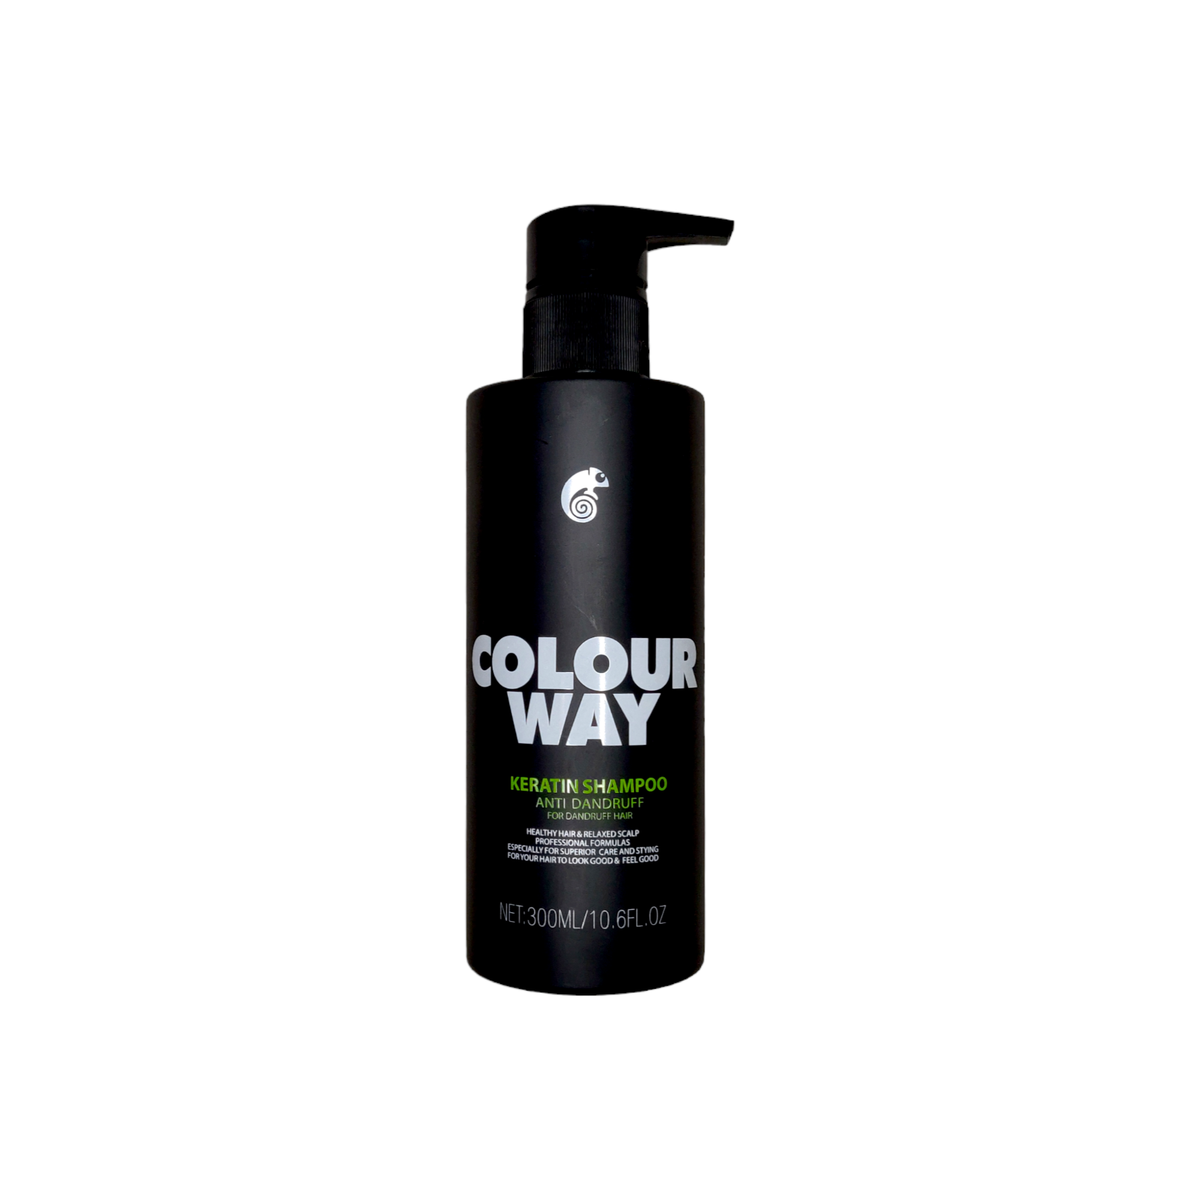 colour-way-keratin-anti-dandruff-shampoo-300ml